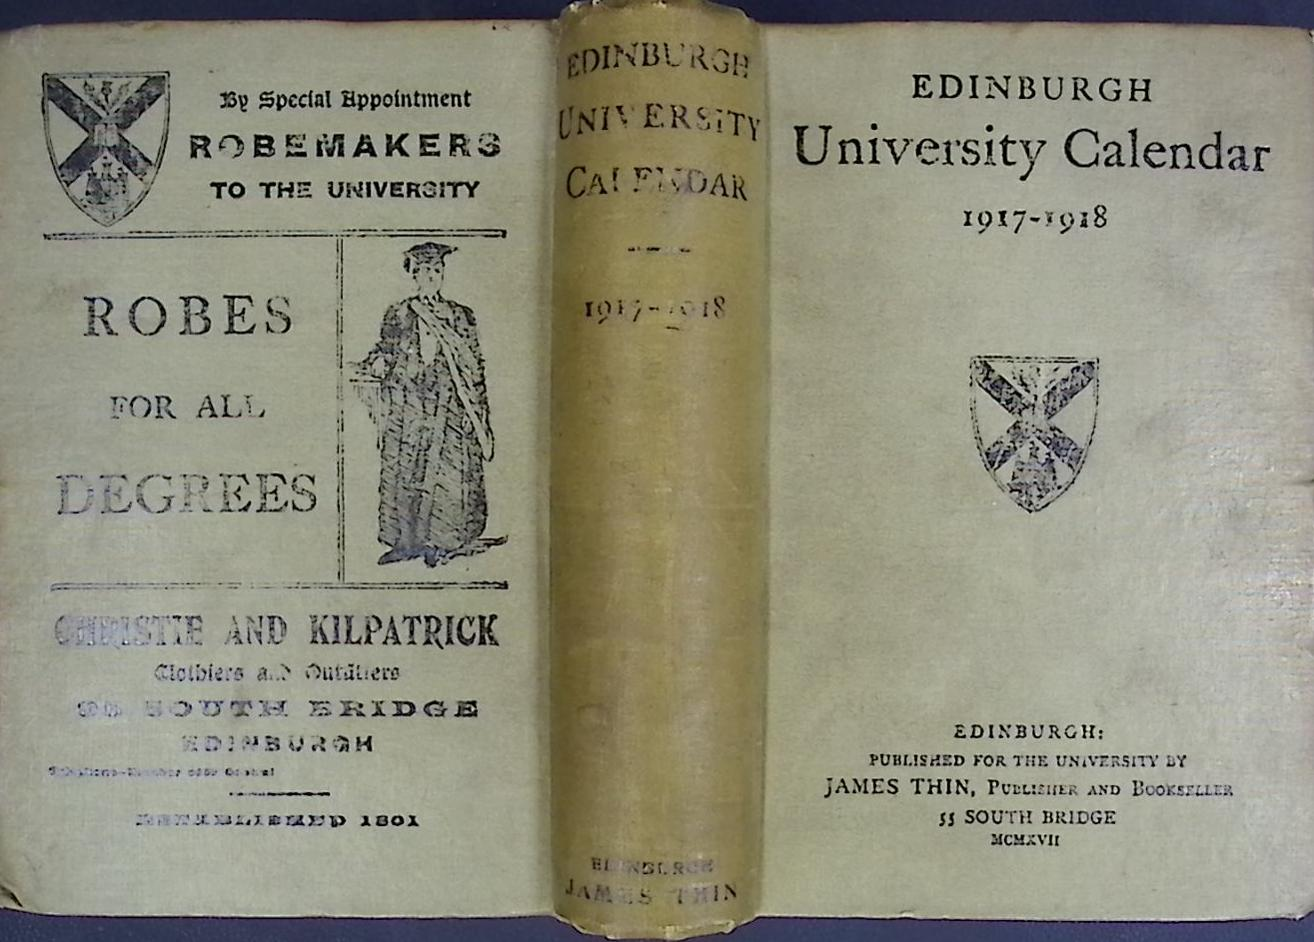 The Edinburgh University Calendar. 1917-1918.